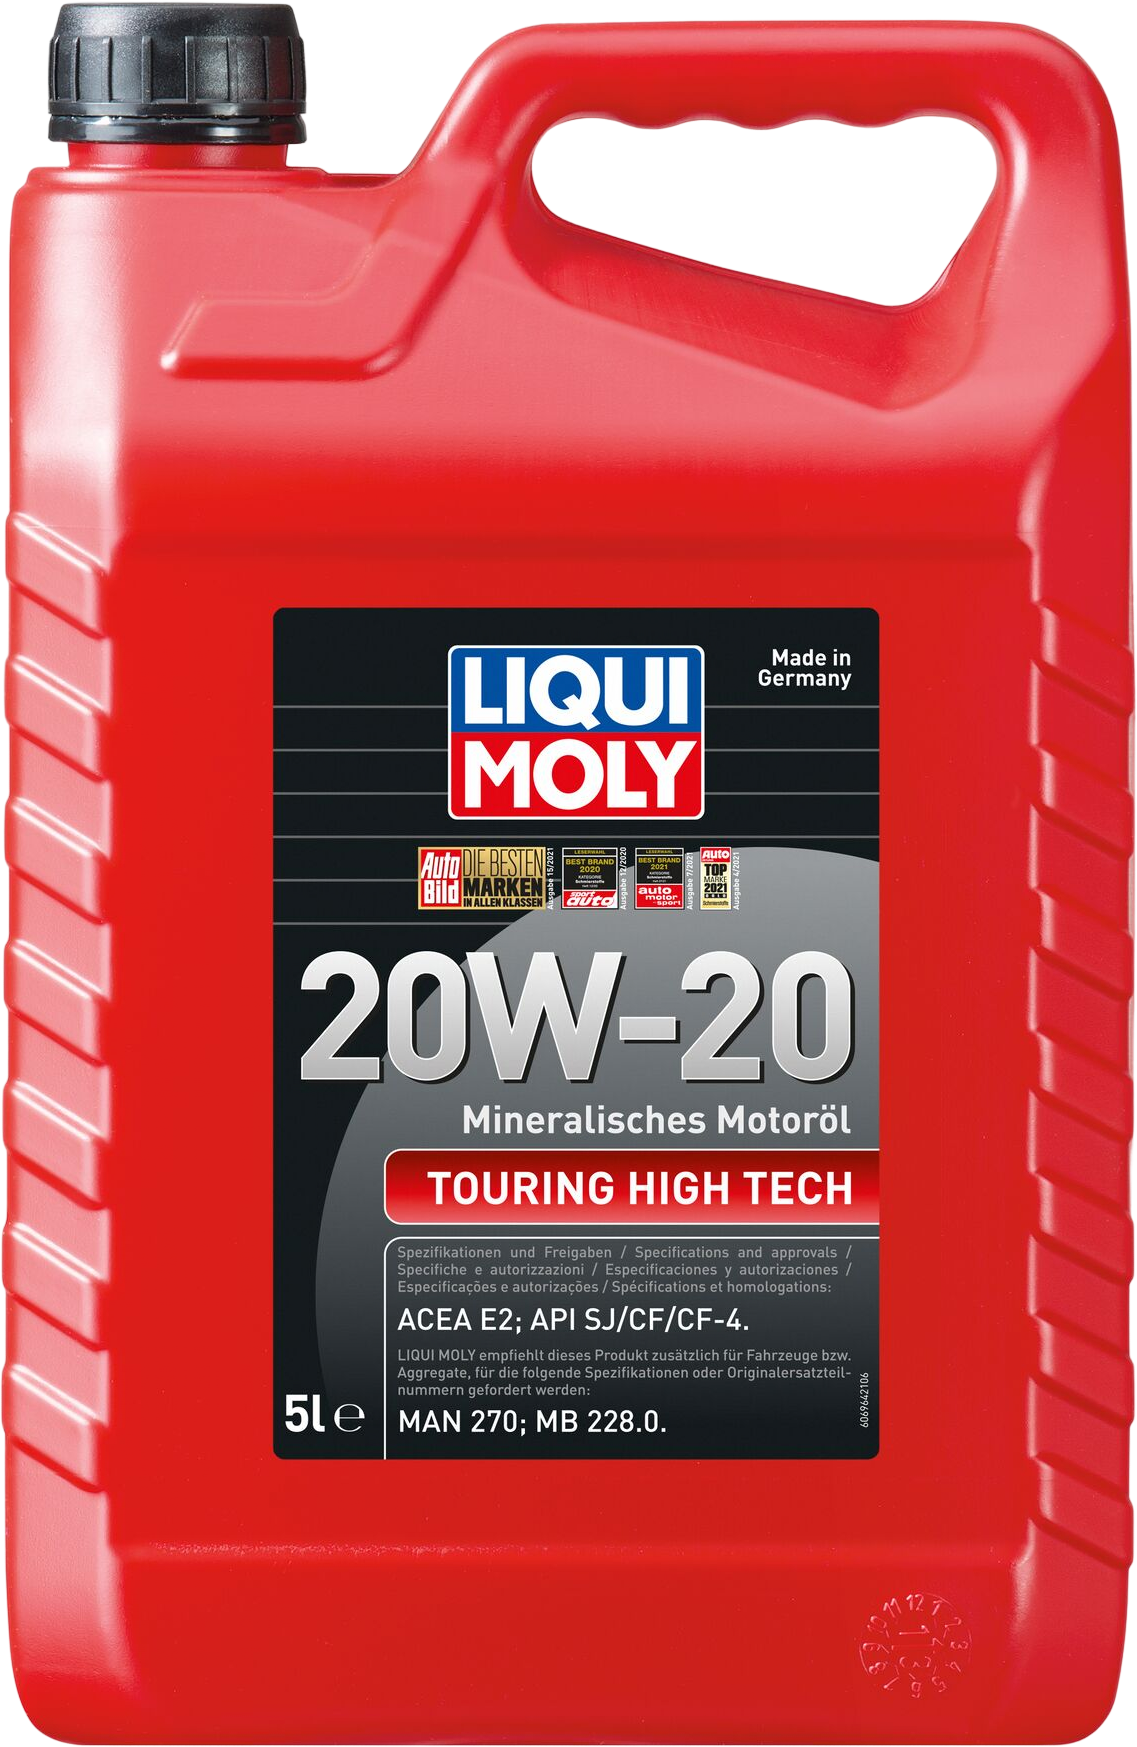 Liqui Moly Touring High Tech 20W-20, 5 lt